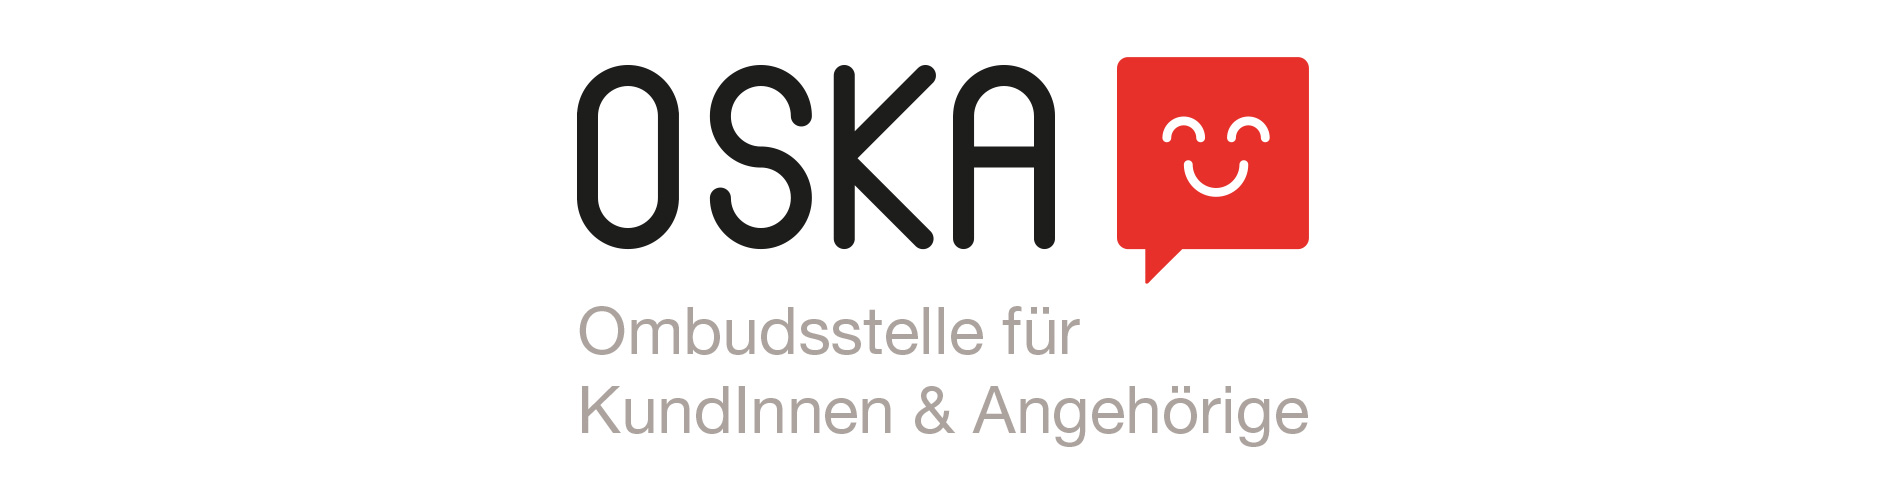 Logo "OSKA" Ombudsstelle für KundInnen & Angehörige